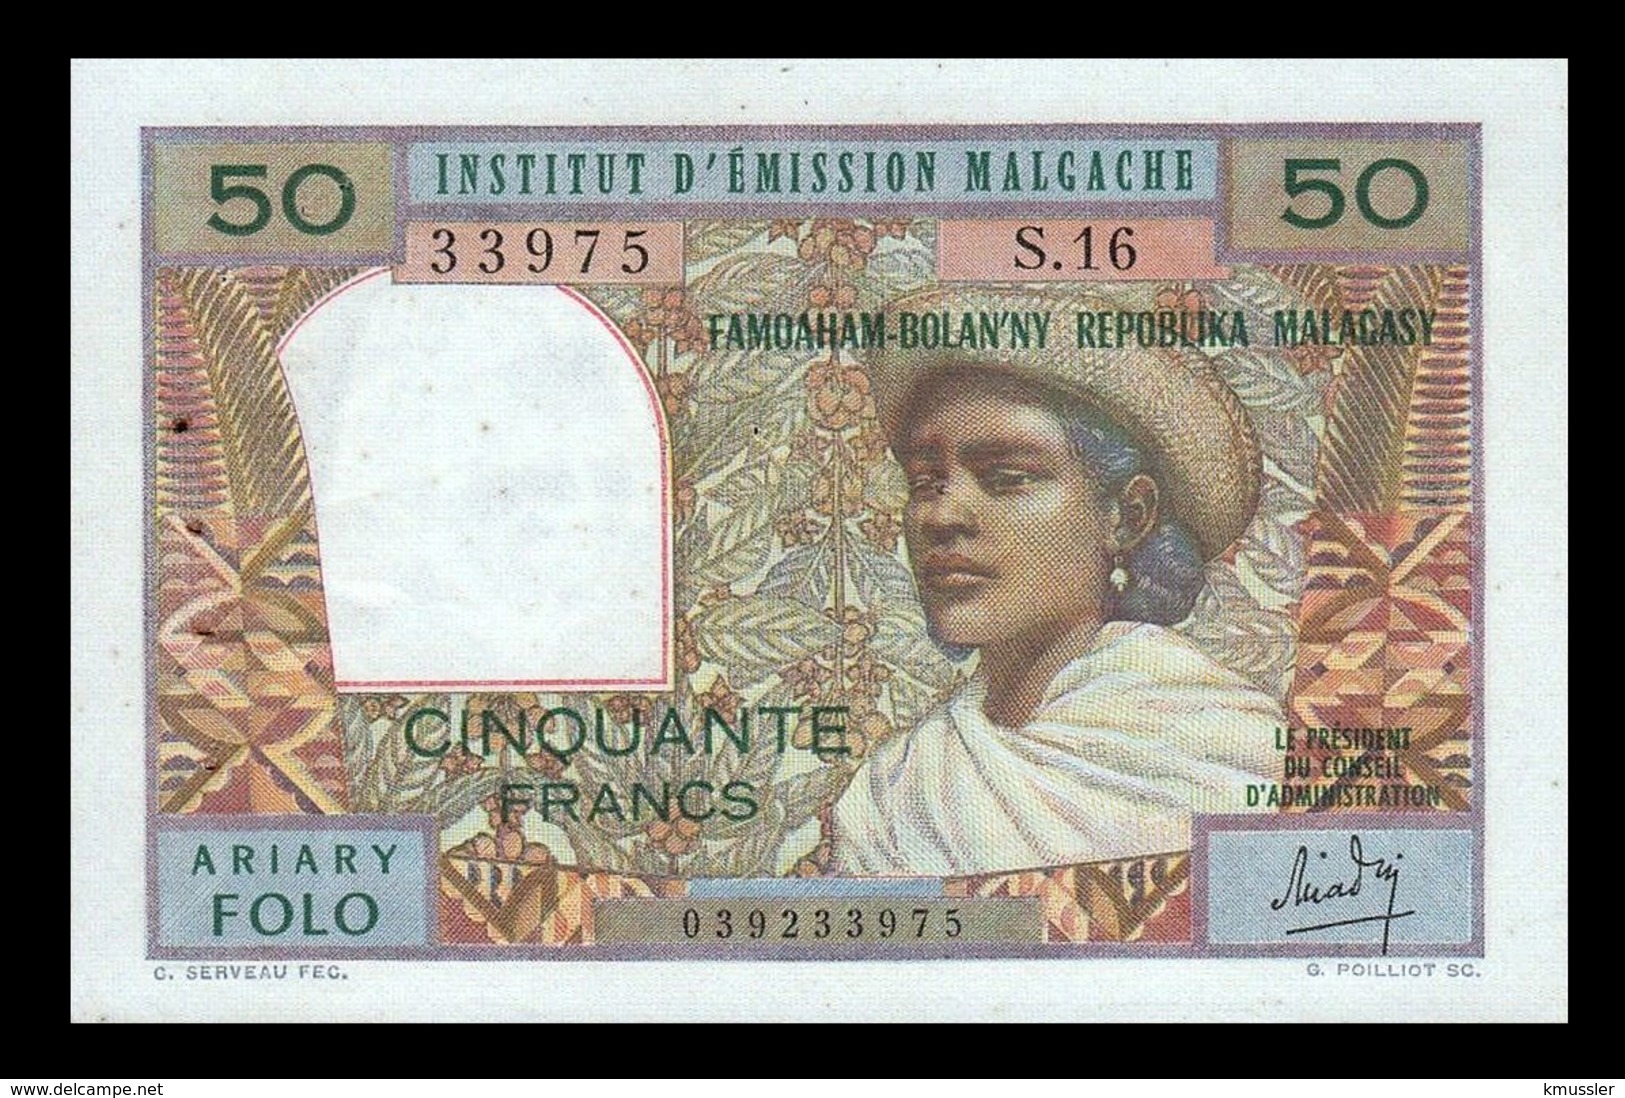 # # # Banknote Madagaskar (Madagascar) 50 Ariary Folo UNC- # # # - Madagascar